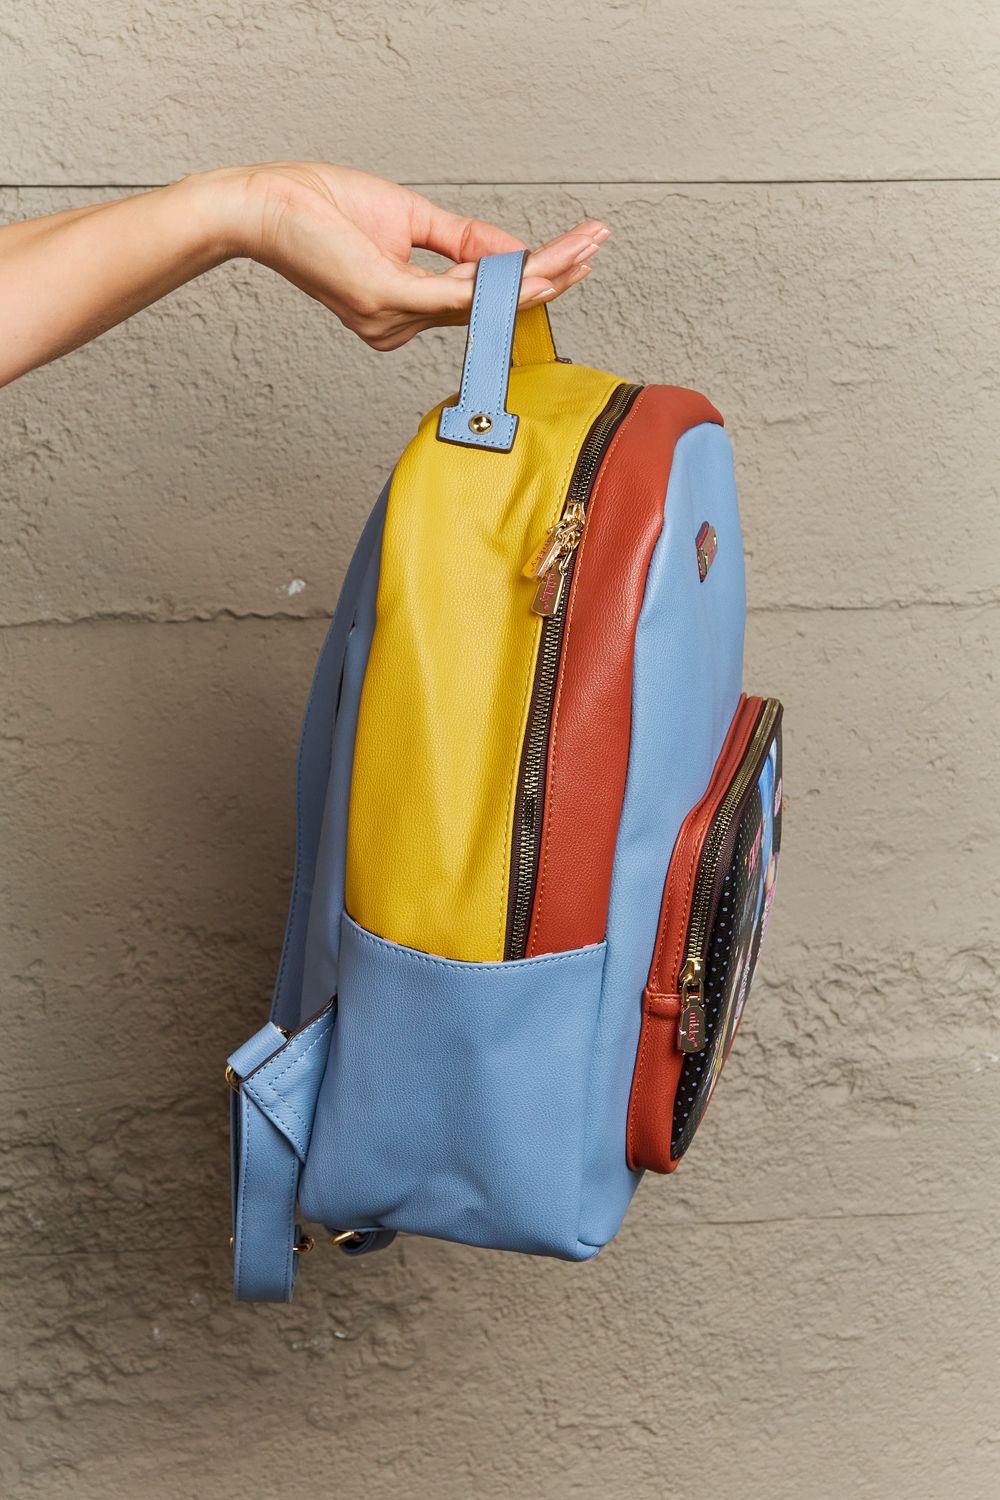 Adorable Fashion Backpacks